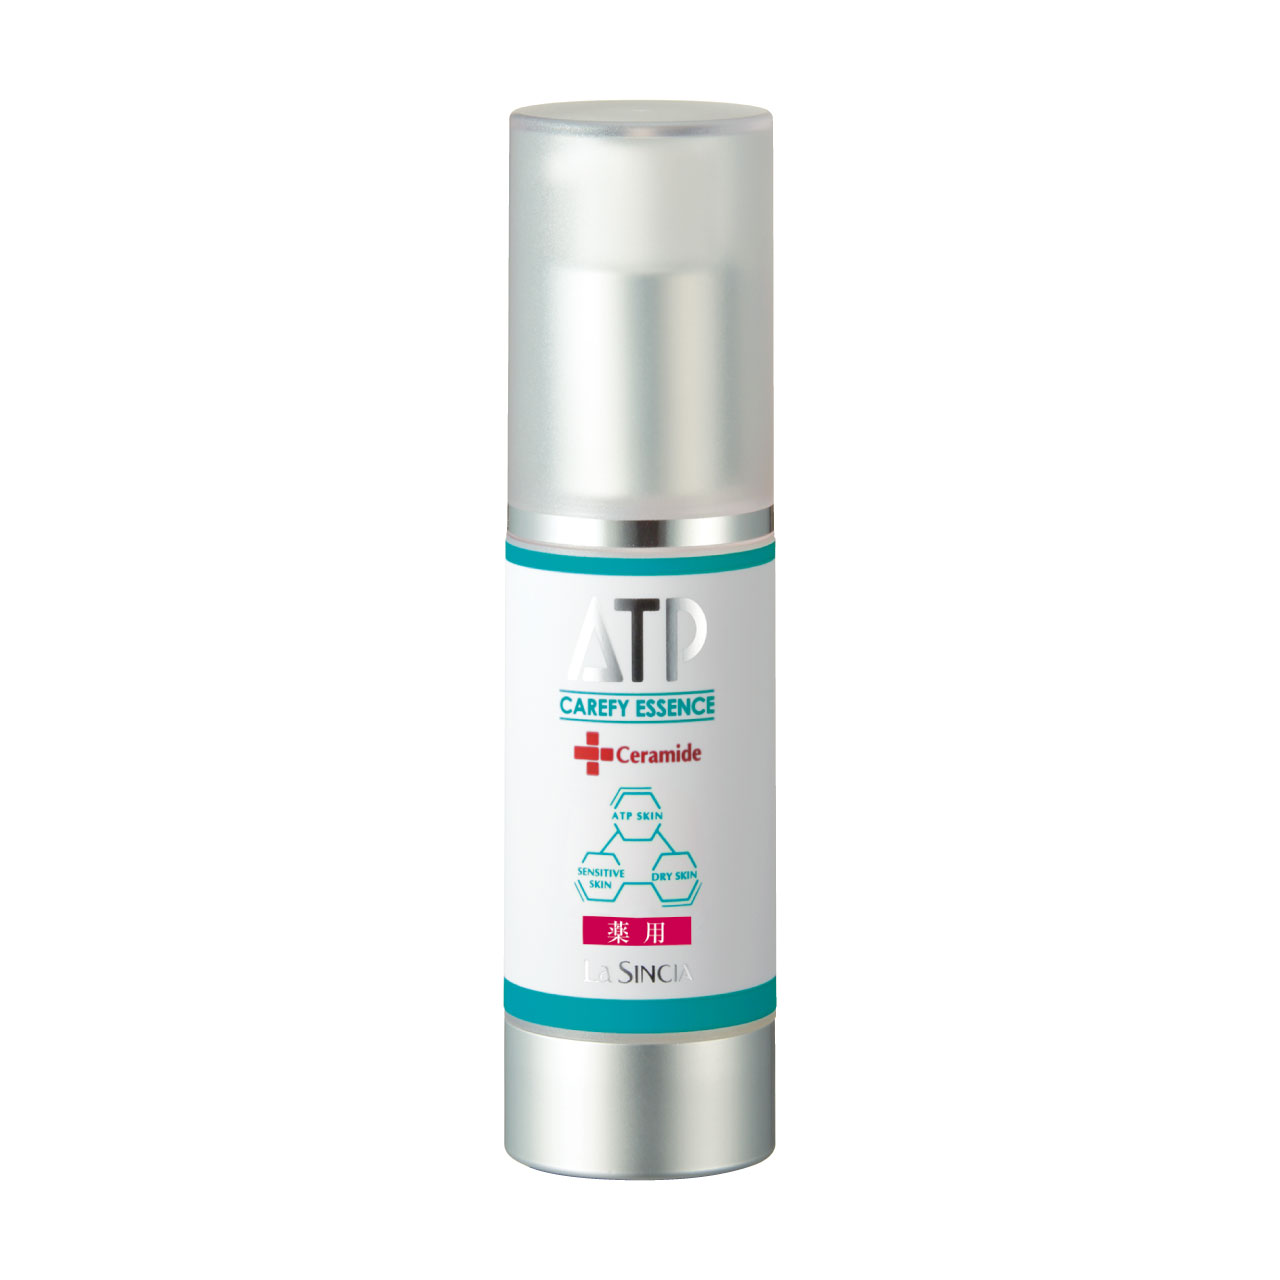 La Sincia ATP Ceramide Carefi Essence for sensitive skin with ceramides, 30 ml